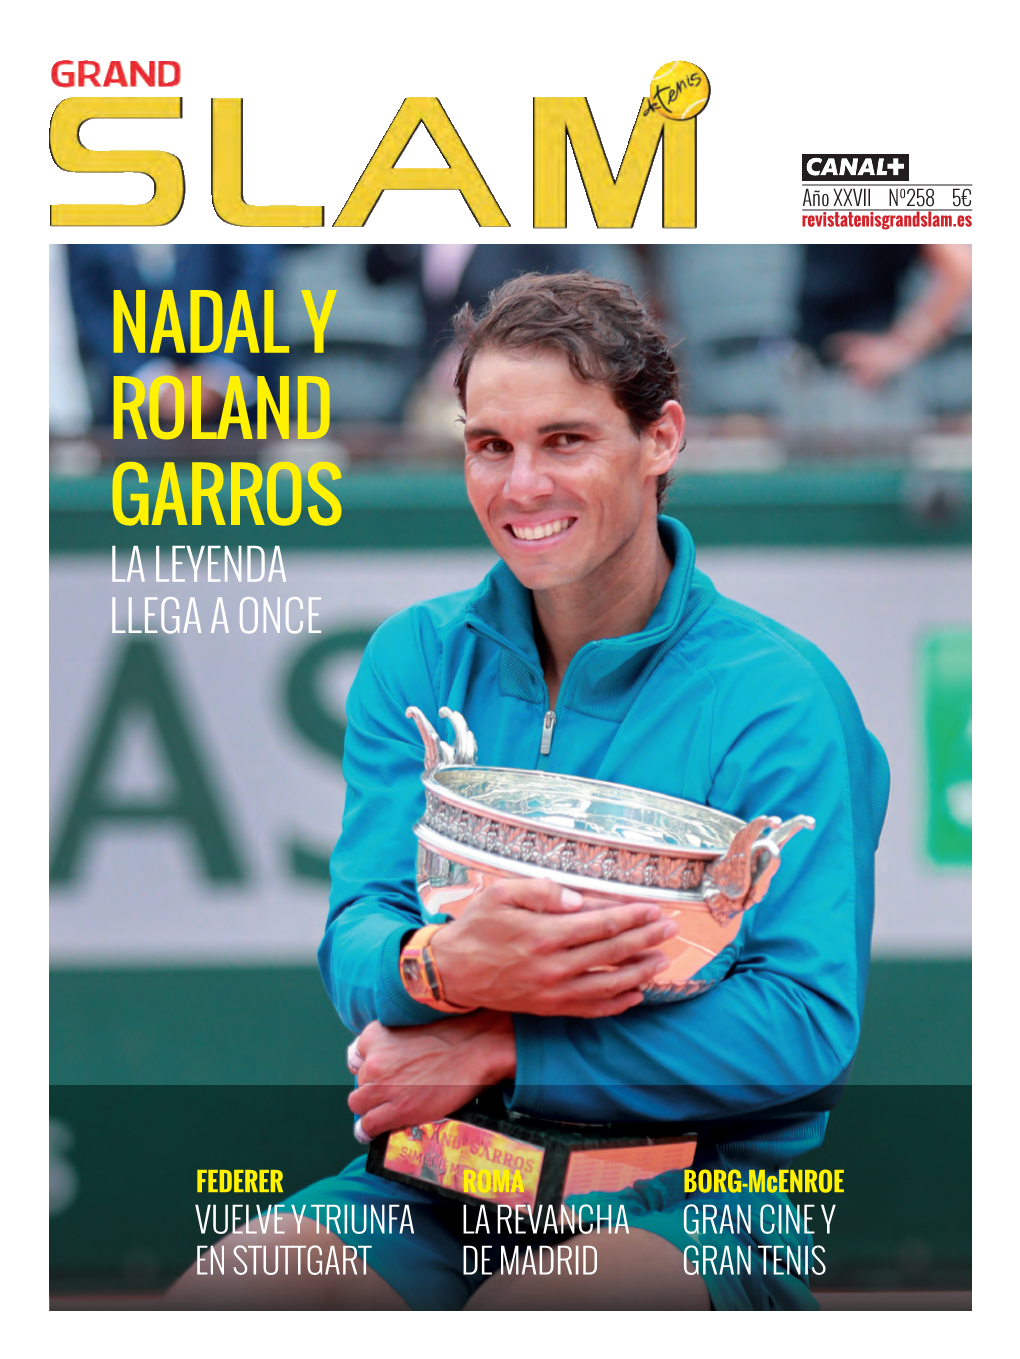 Nadal Y Roland Garros La Leyenda Llega a Once